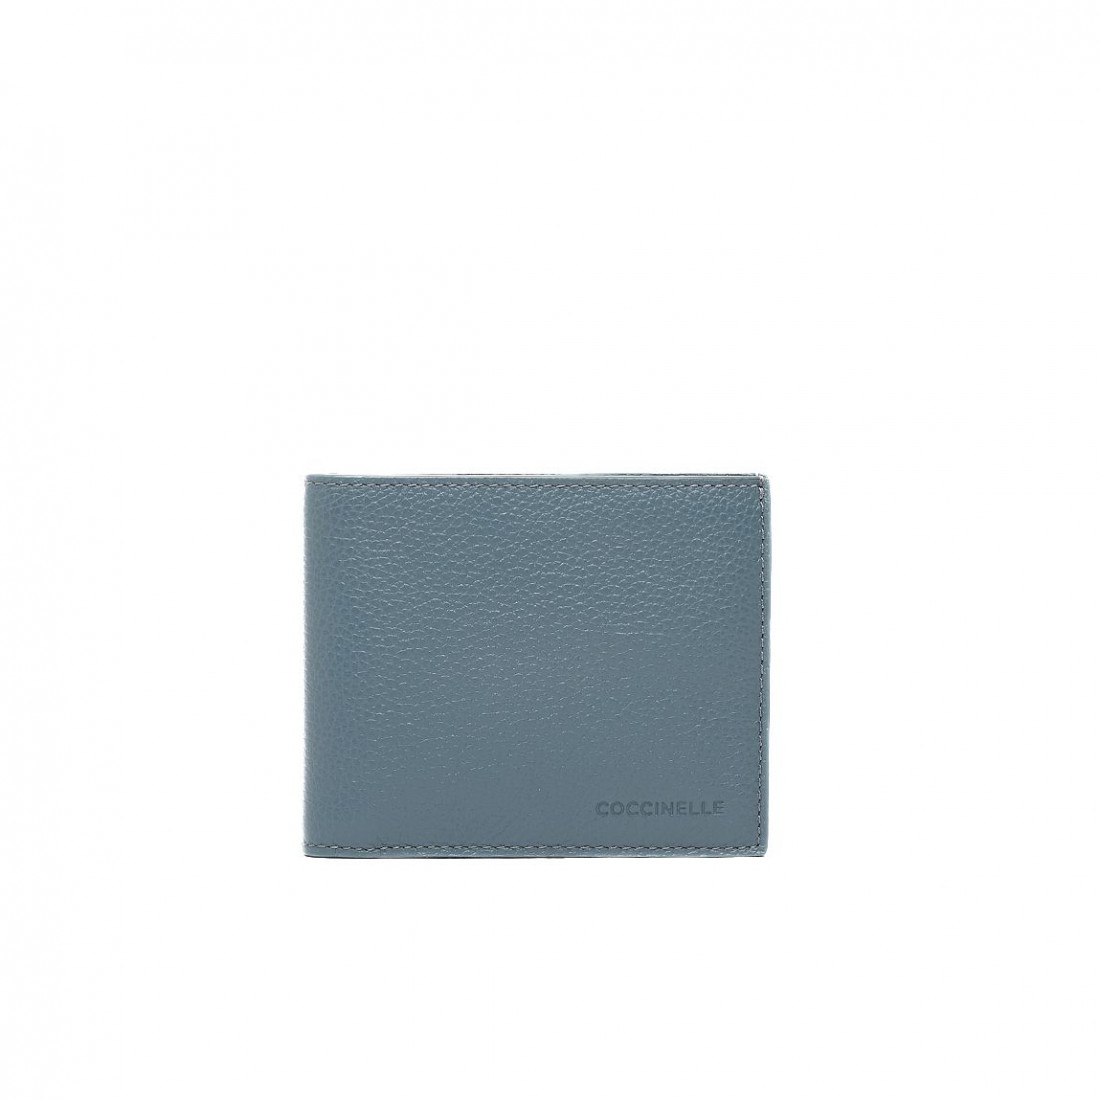 Coccinelle men's wallet in shark grey leather